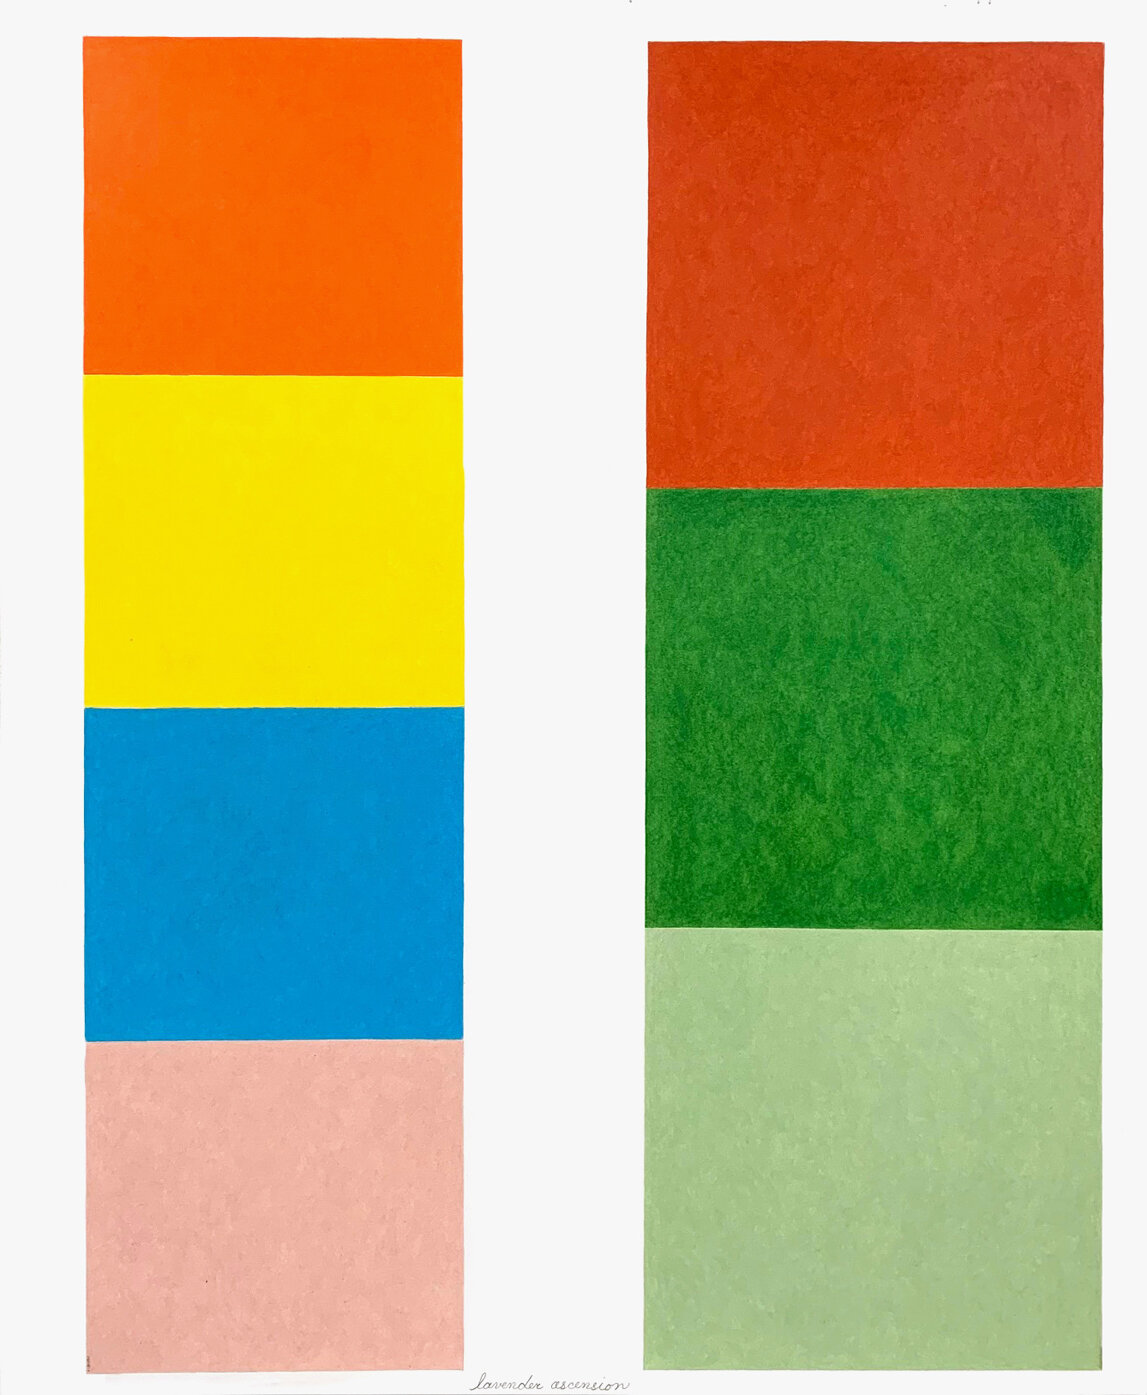 David X Levine: Color + Form = X